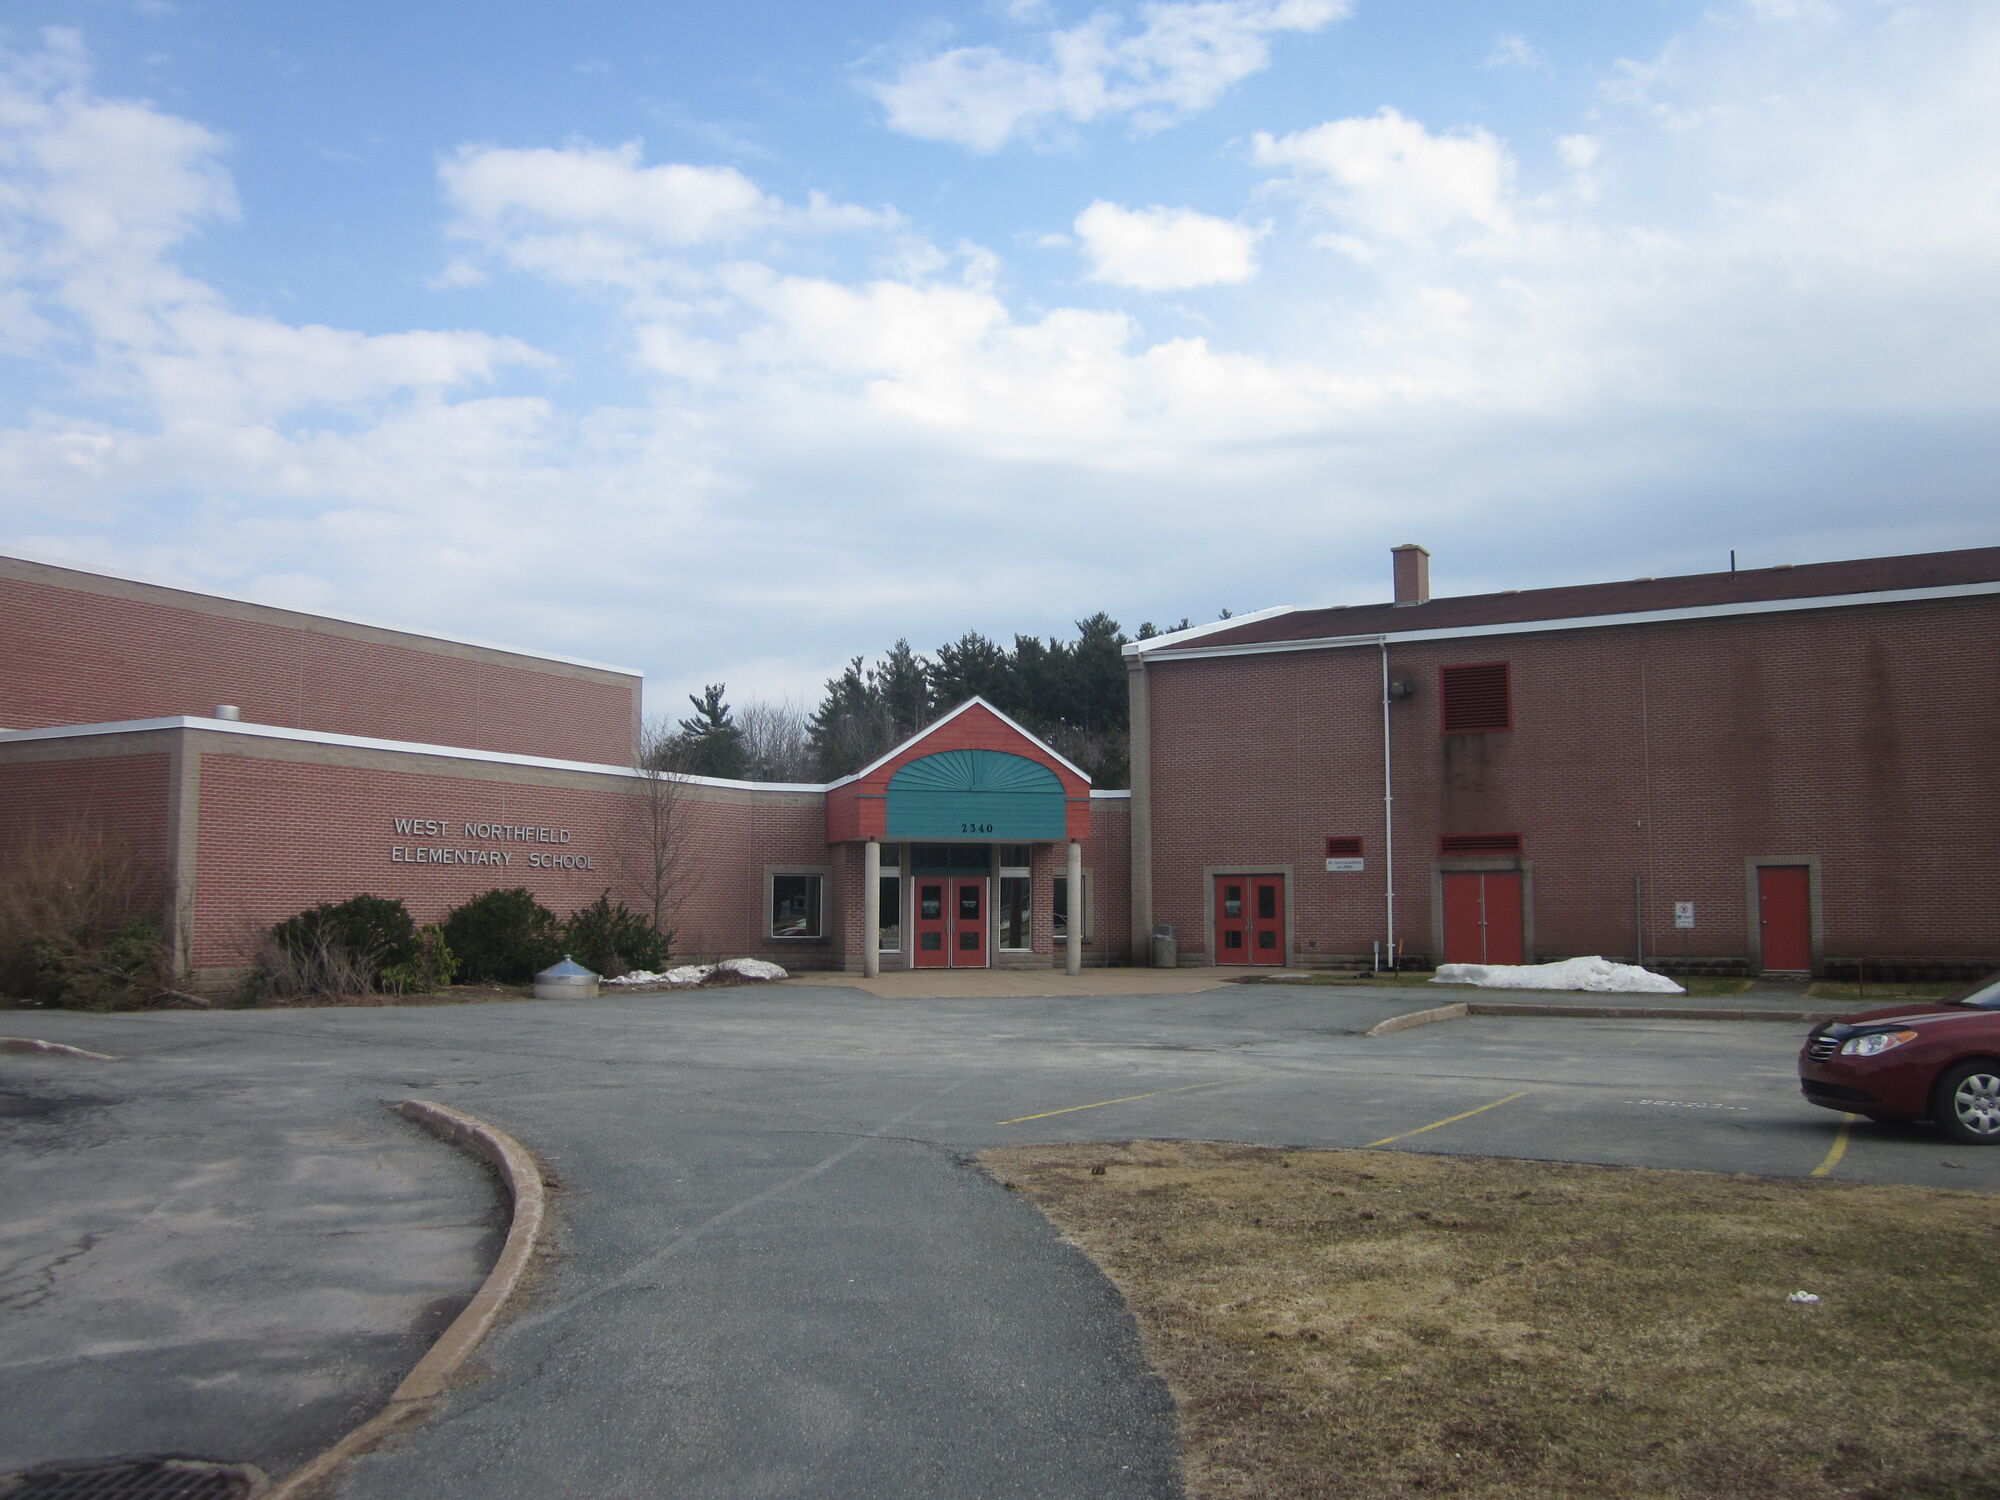 West Northfield Elementary School Schools around Canada Wiki